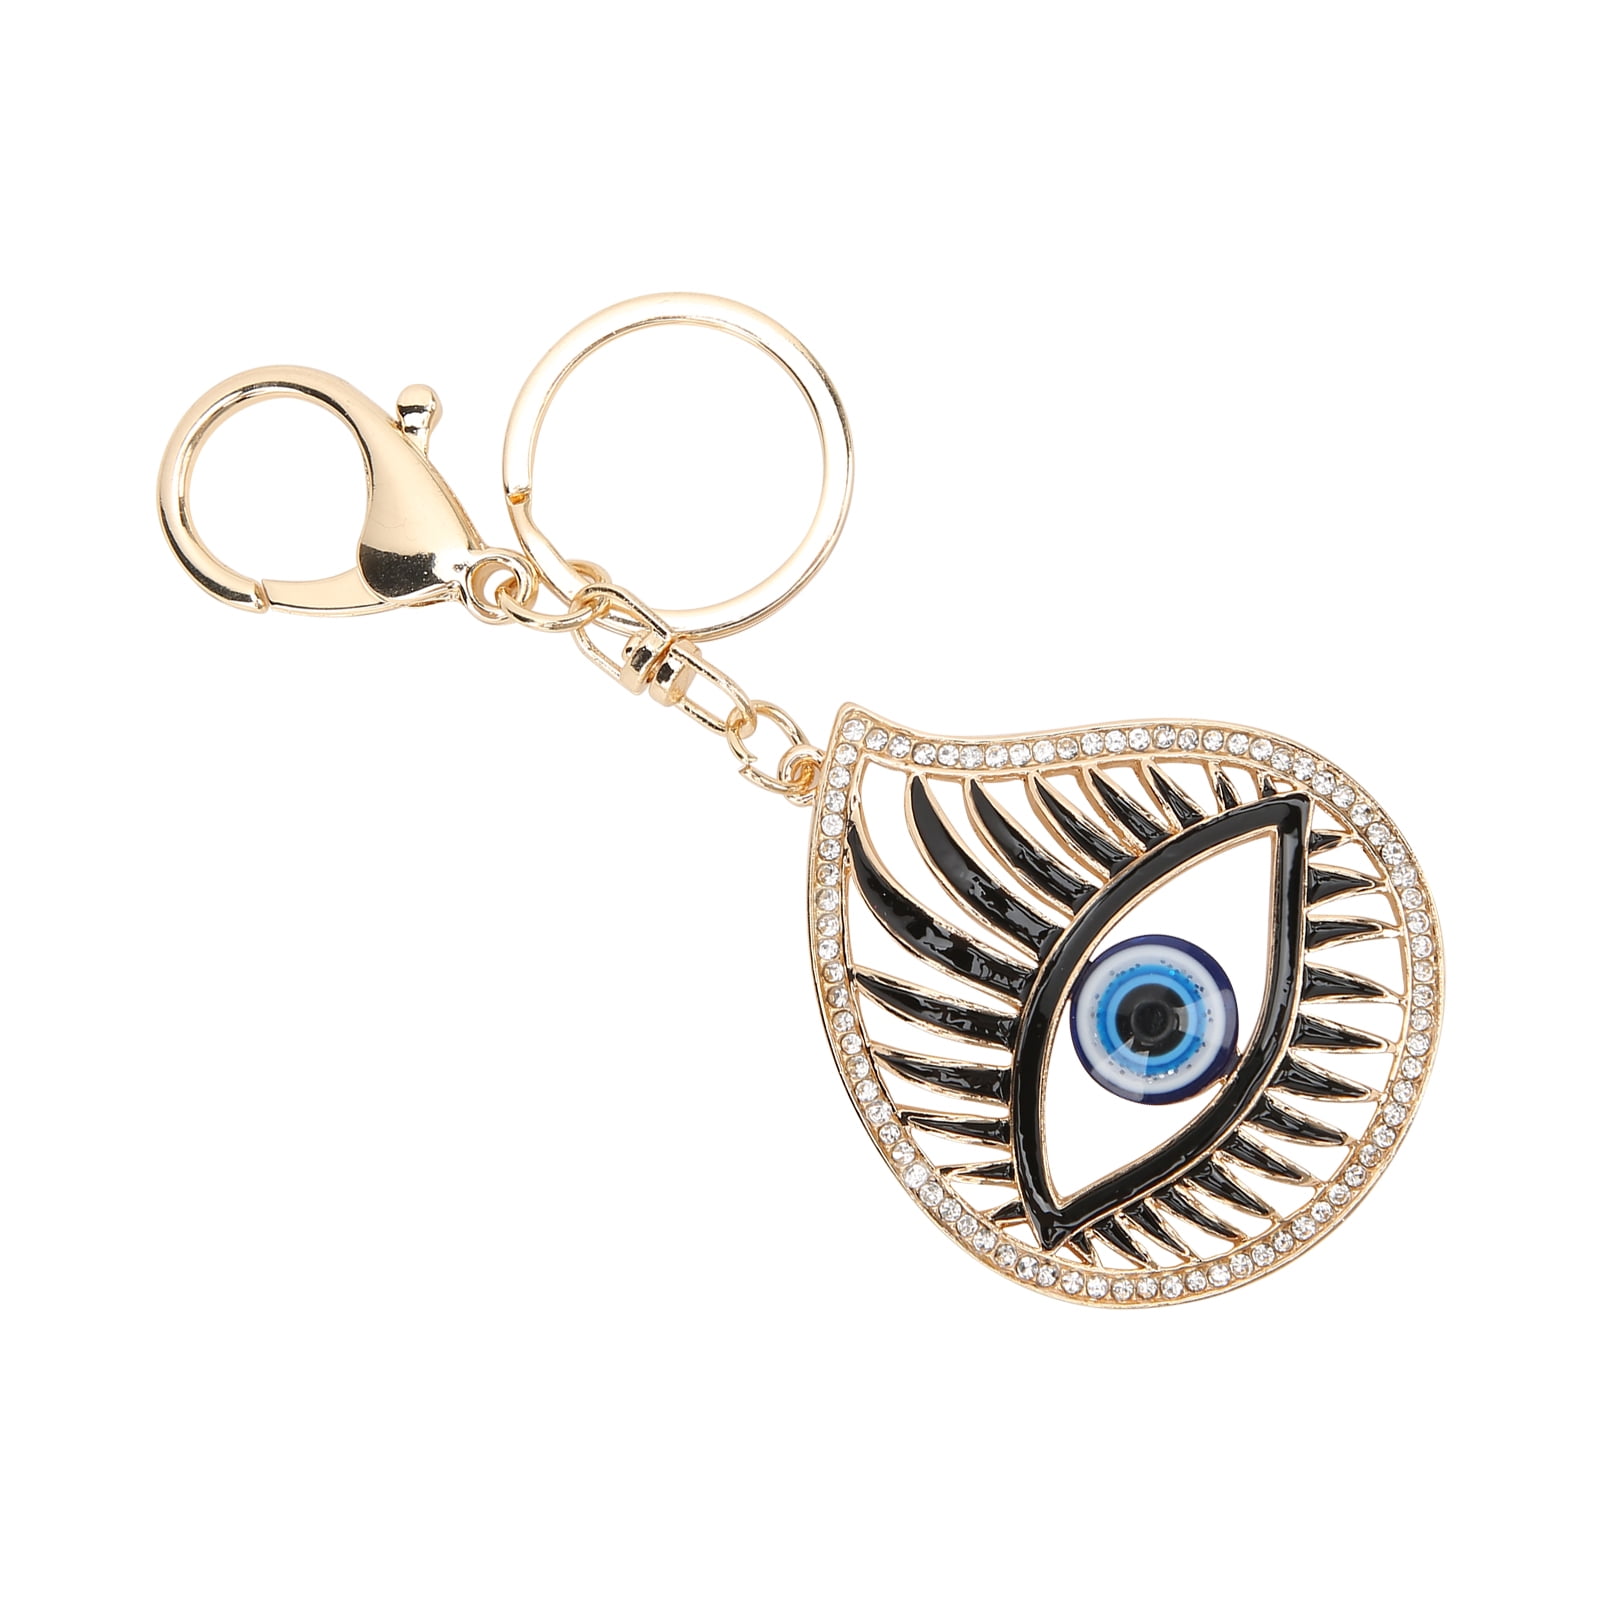 Fashion Blue Eye Eyelash Charm Pendant Crystal Purse HandBag Key Ring Chain Gift 